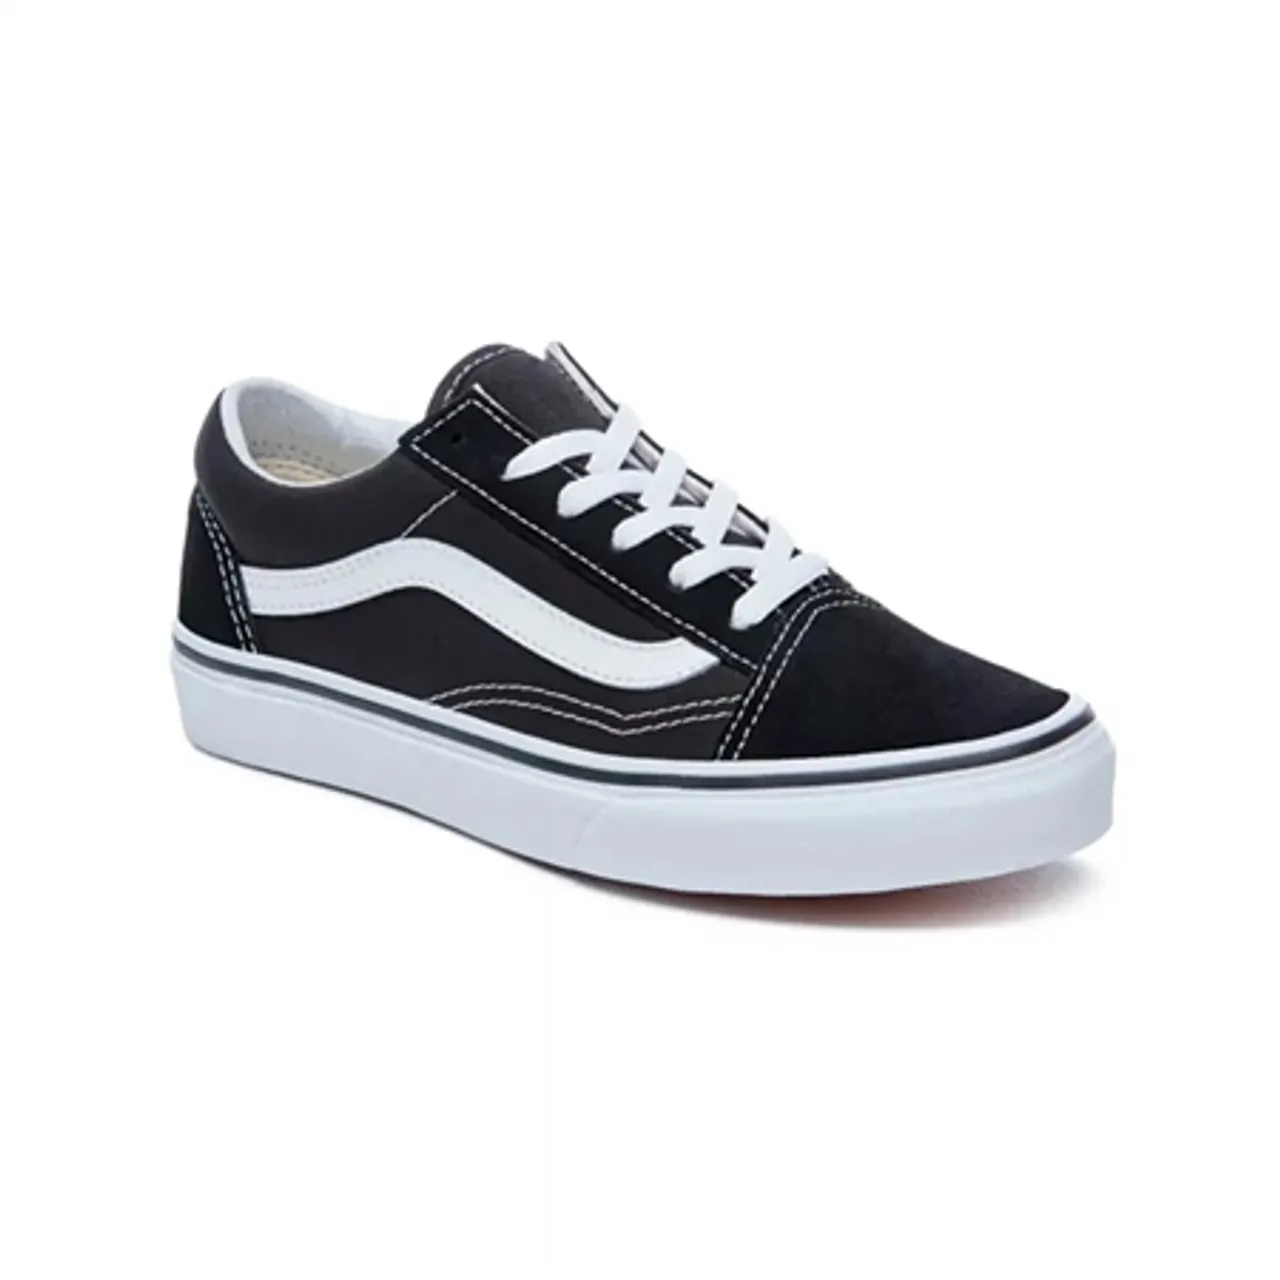 Vans Boys Old Skool Shoe - Black & White - KIDS 10 (EU 27)